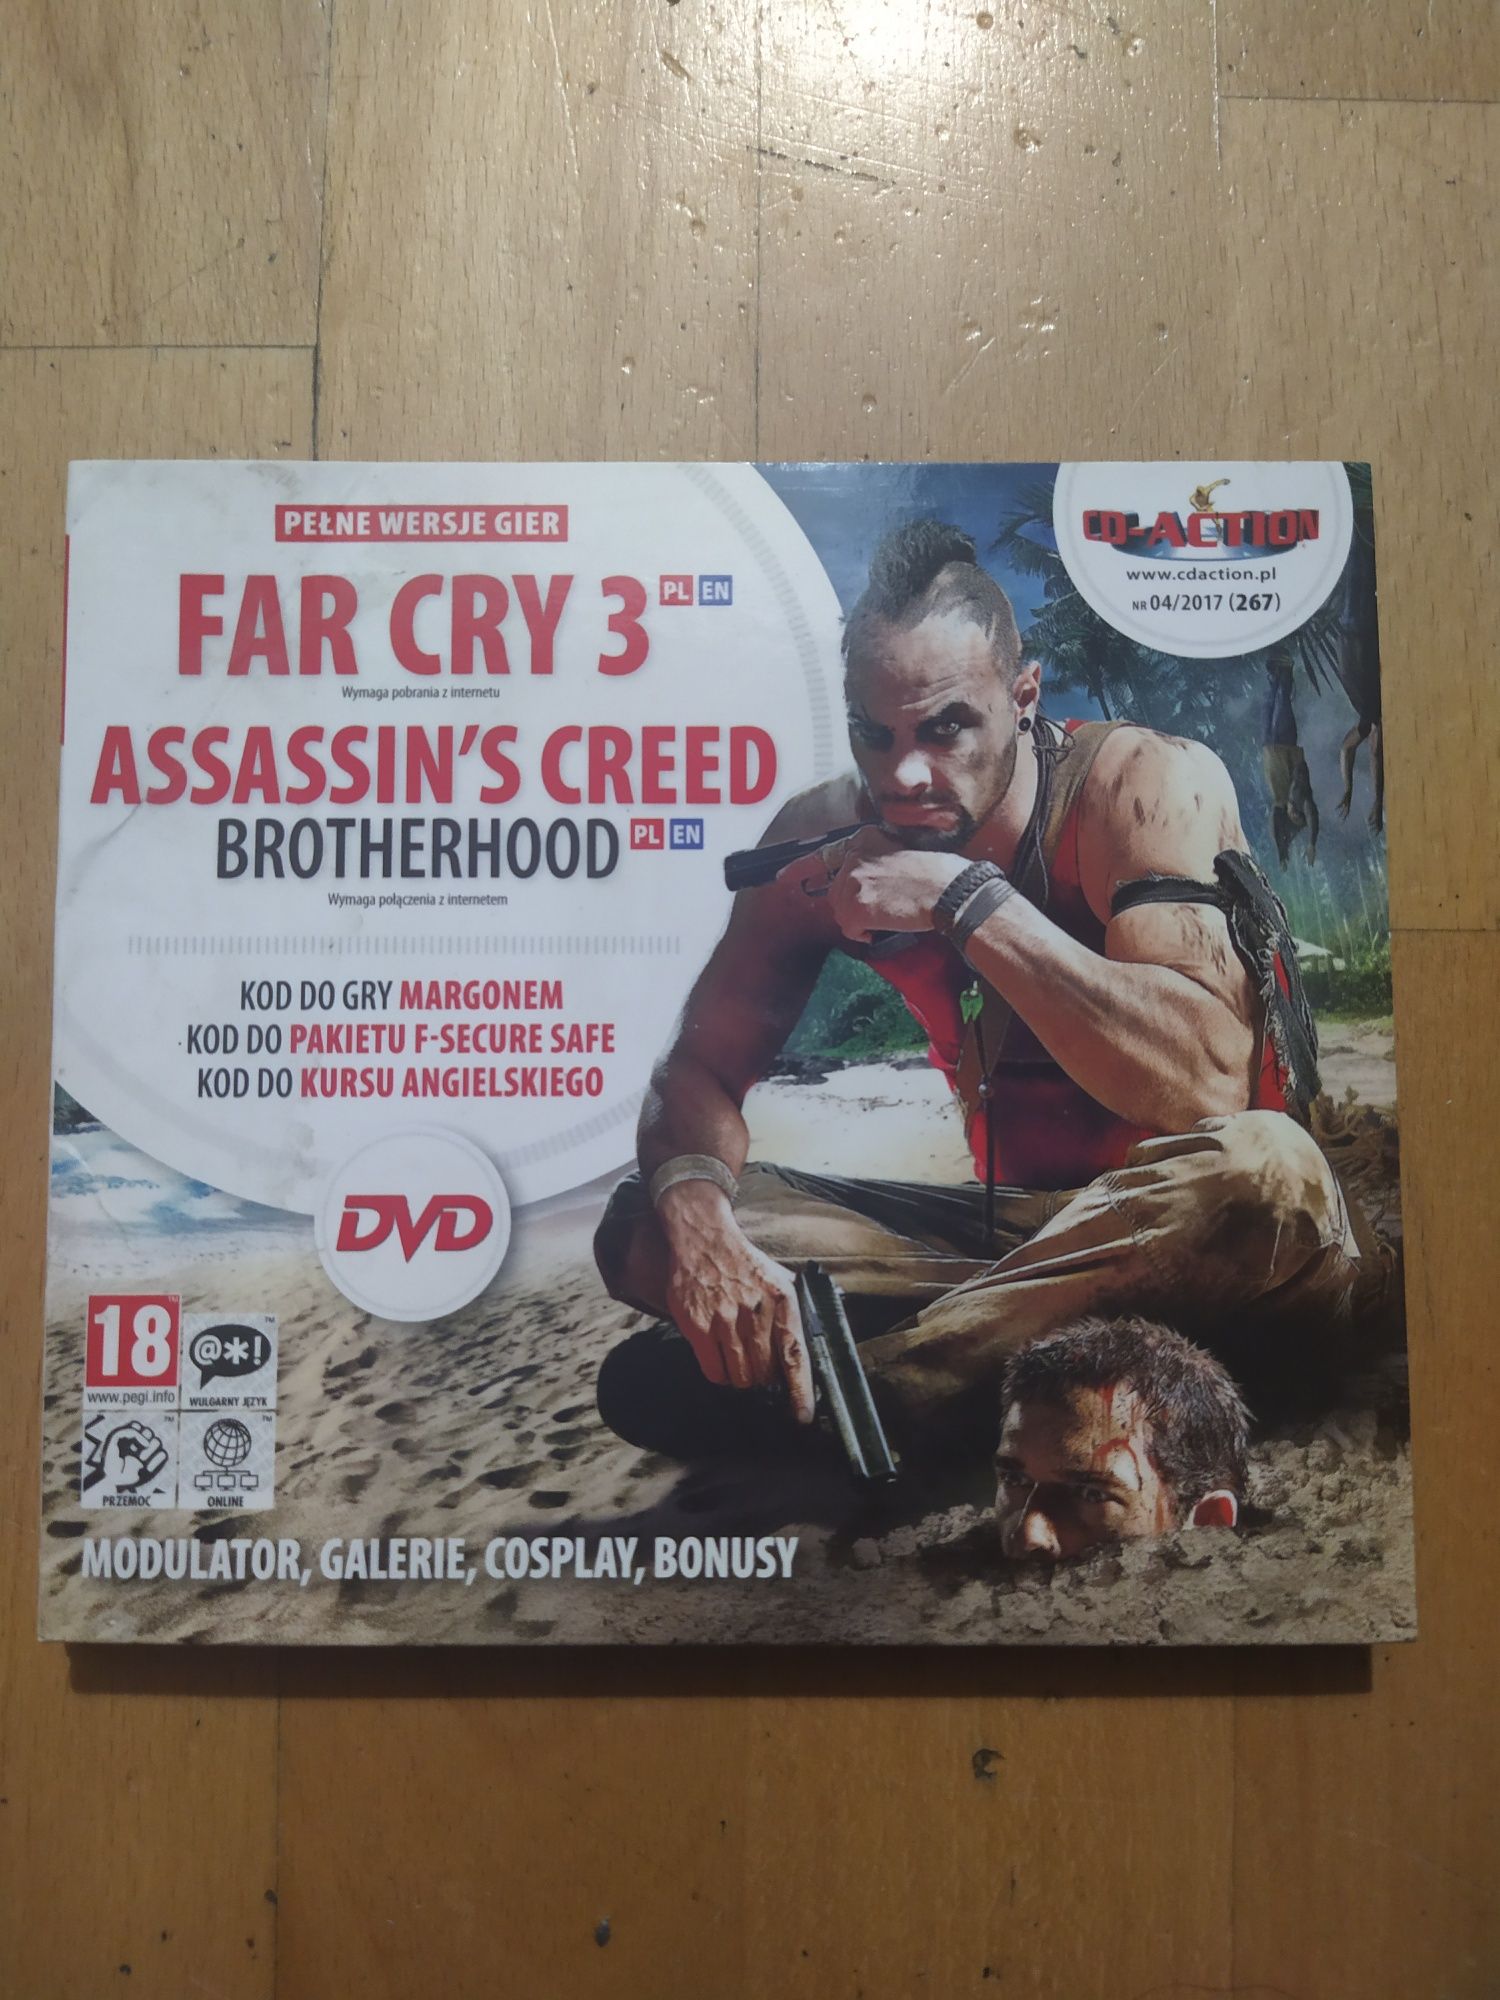 CD action 04/2017 Far cry 3, Assassin's brotherhood